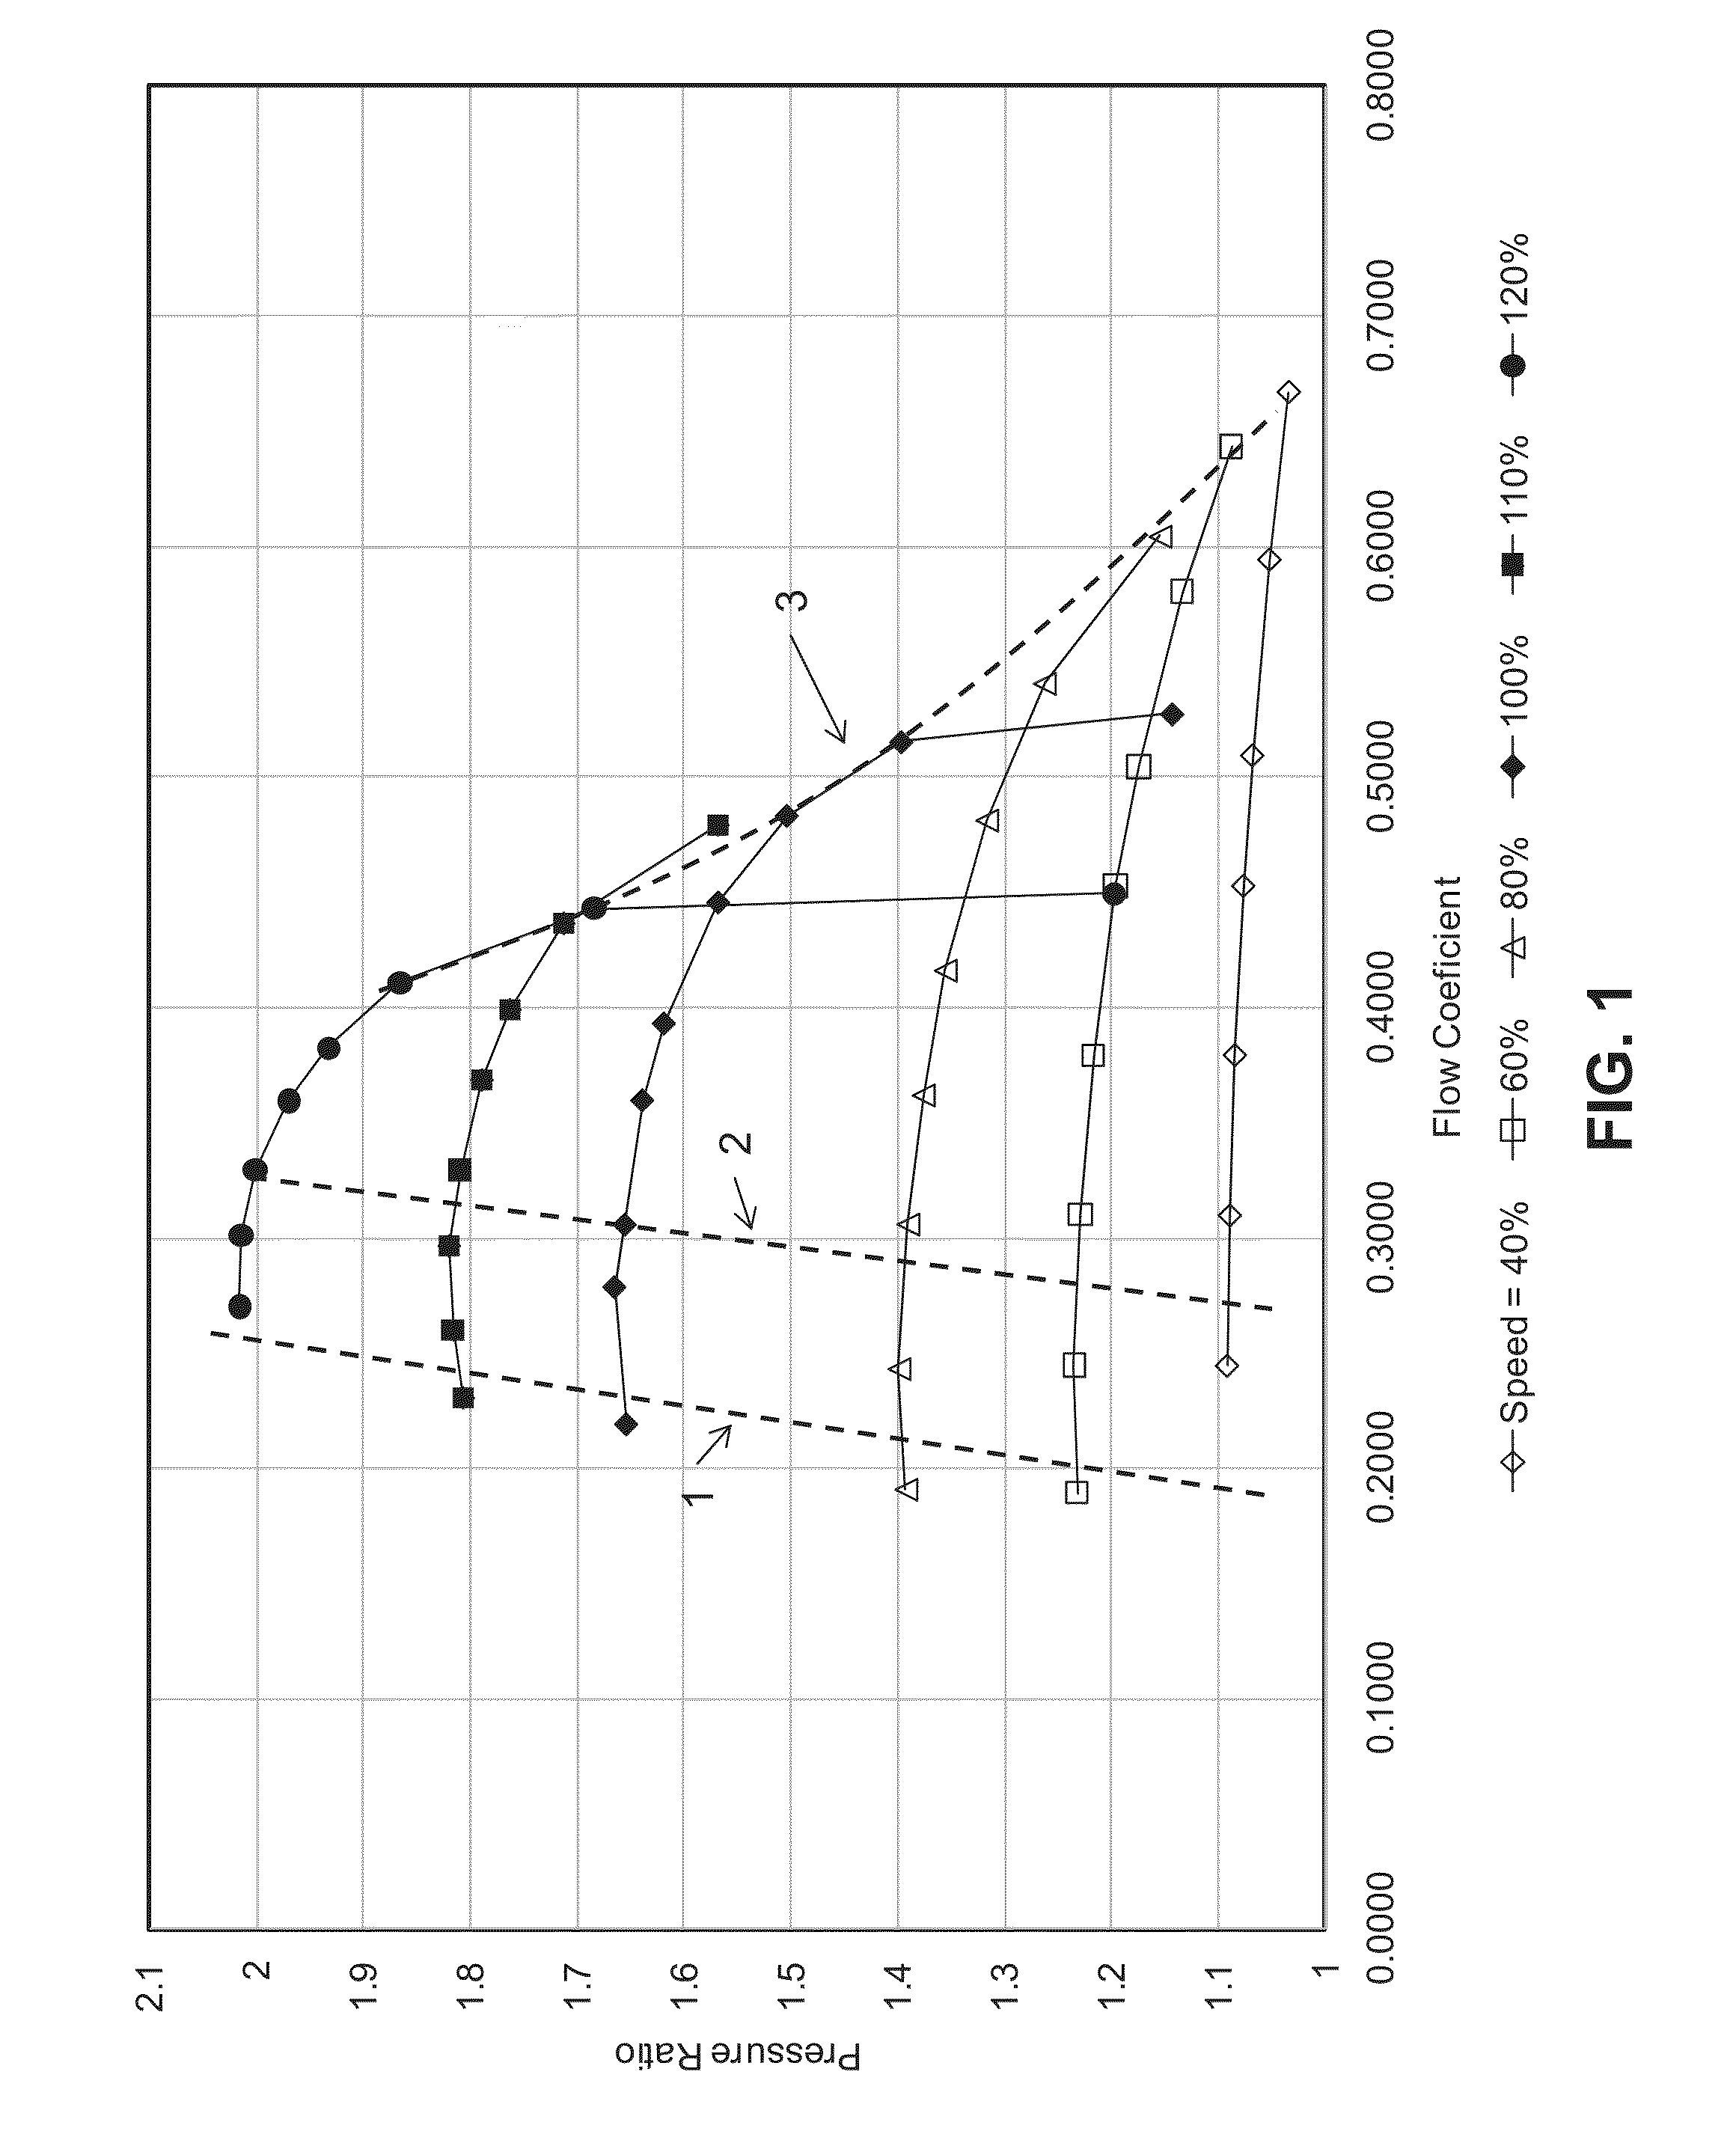 Cyclic adsorption process using centrifugal compressors